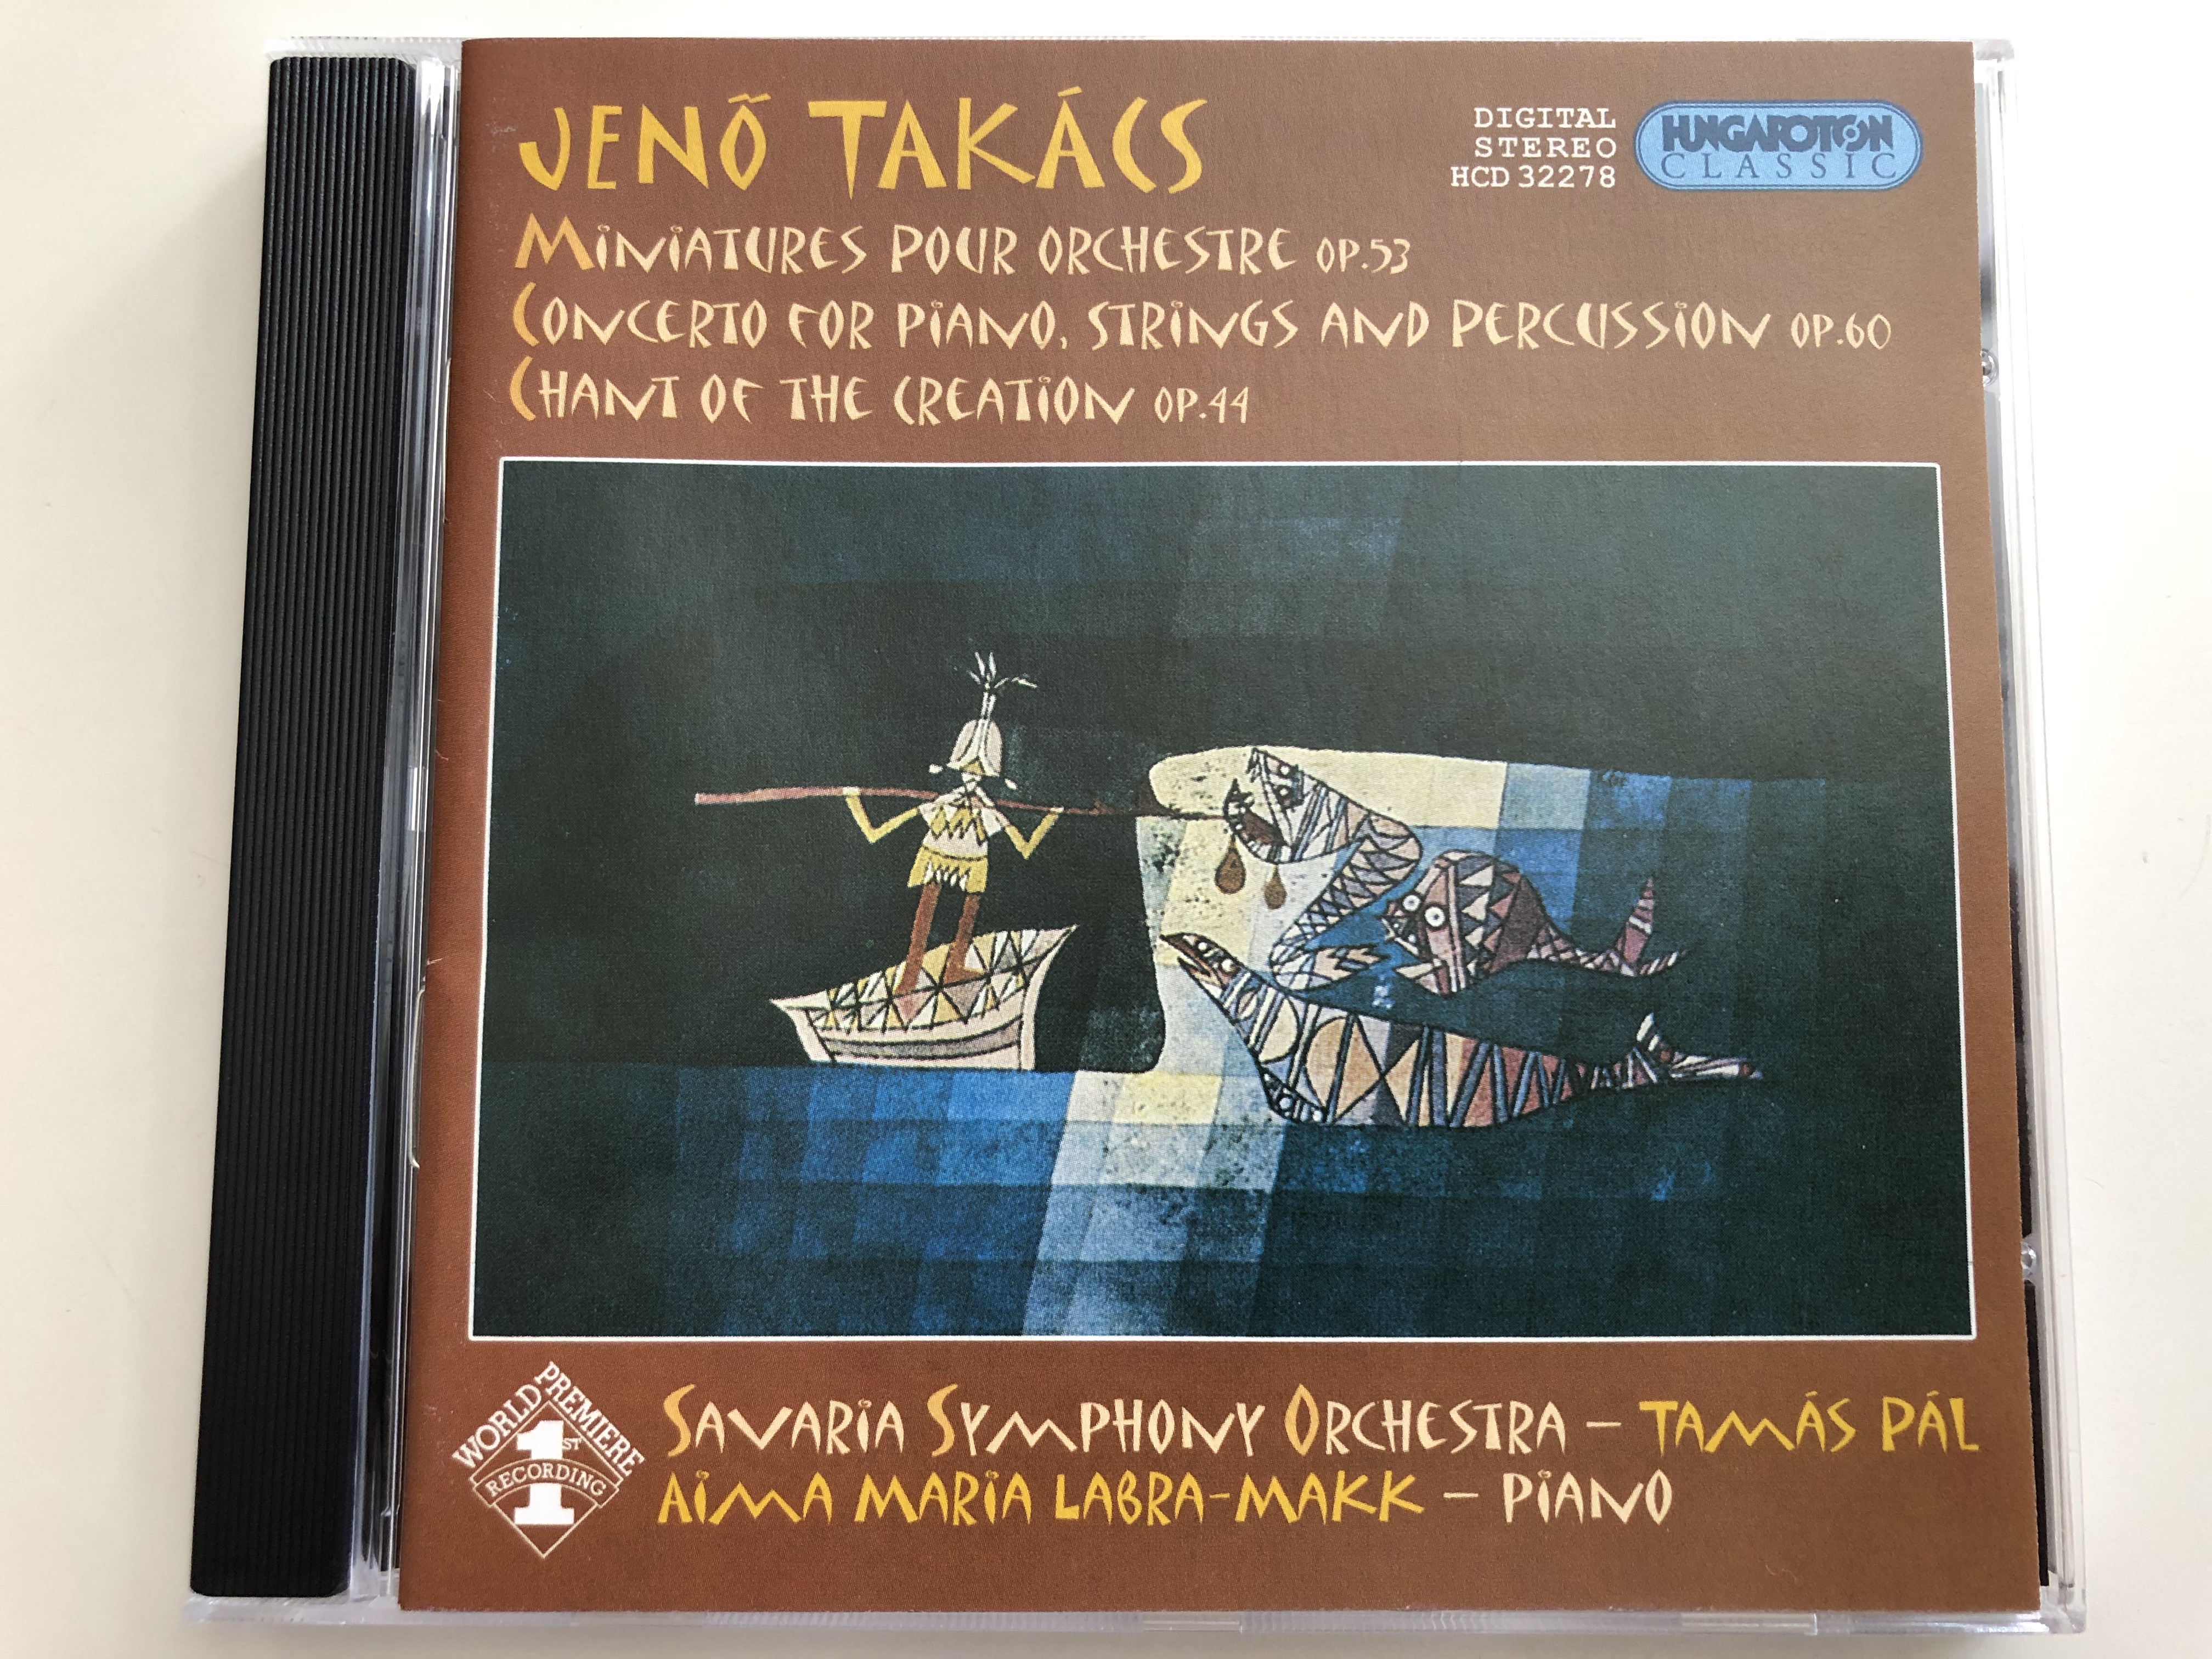 jen-tak-cs-miniatures-pour-orchestre-concerto-for-piano-strings-and-percussion-op.-60-savaria-symphony-orchestra-tam-s-p-l-aima-maria-labra-makk-piano-hungaroton-classic-audio-cd-2003-hcd-32278-1-.jpg